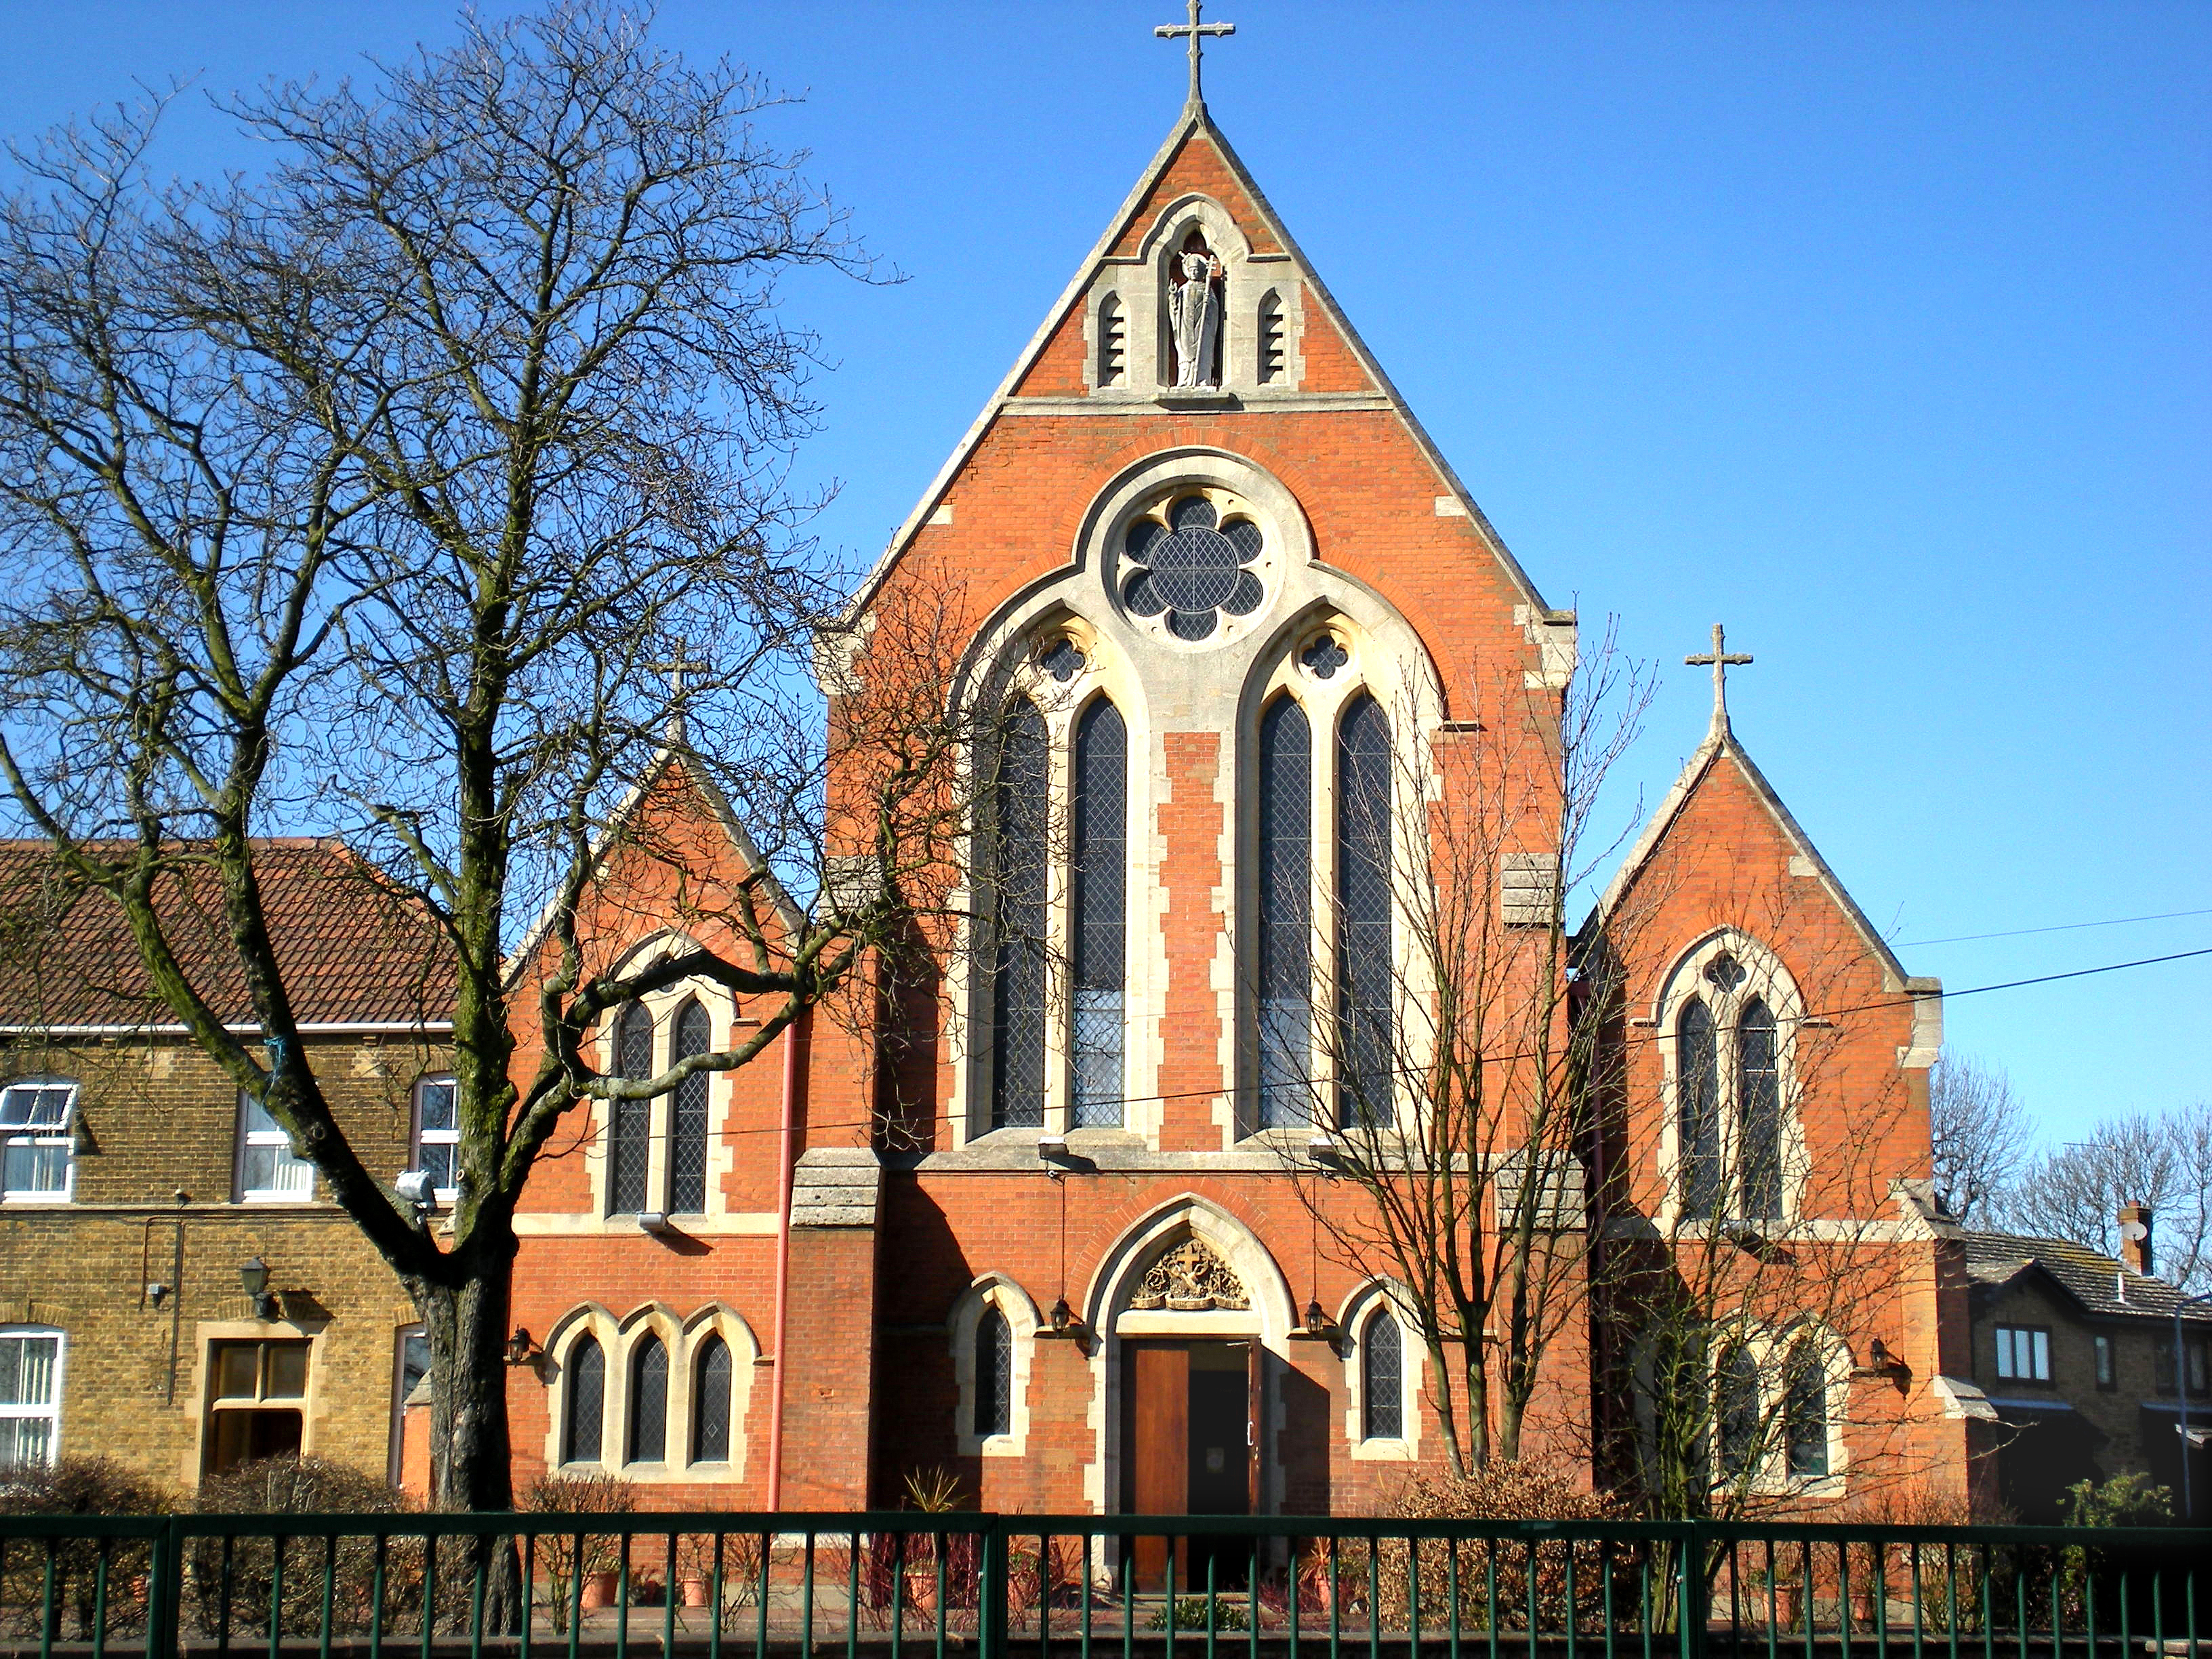 St Thomas of Canterbury Church, Woodford Green